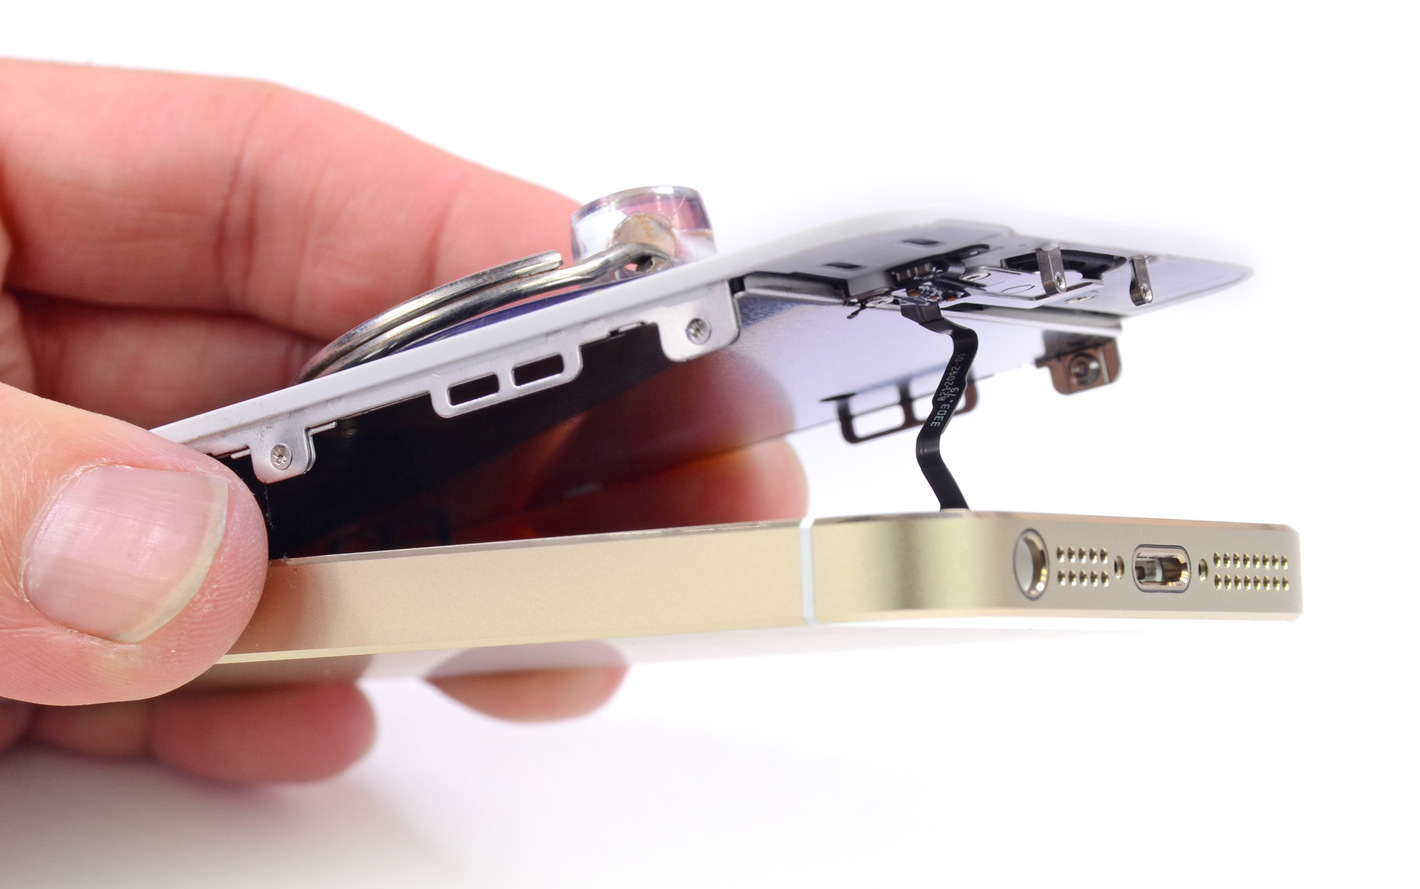 iPhone 5s Teardown - iFixit